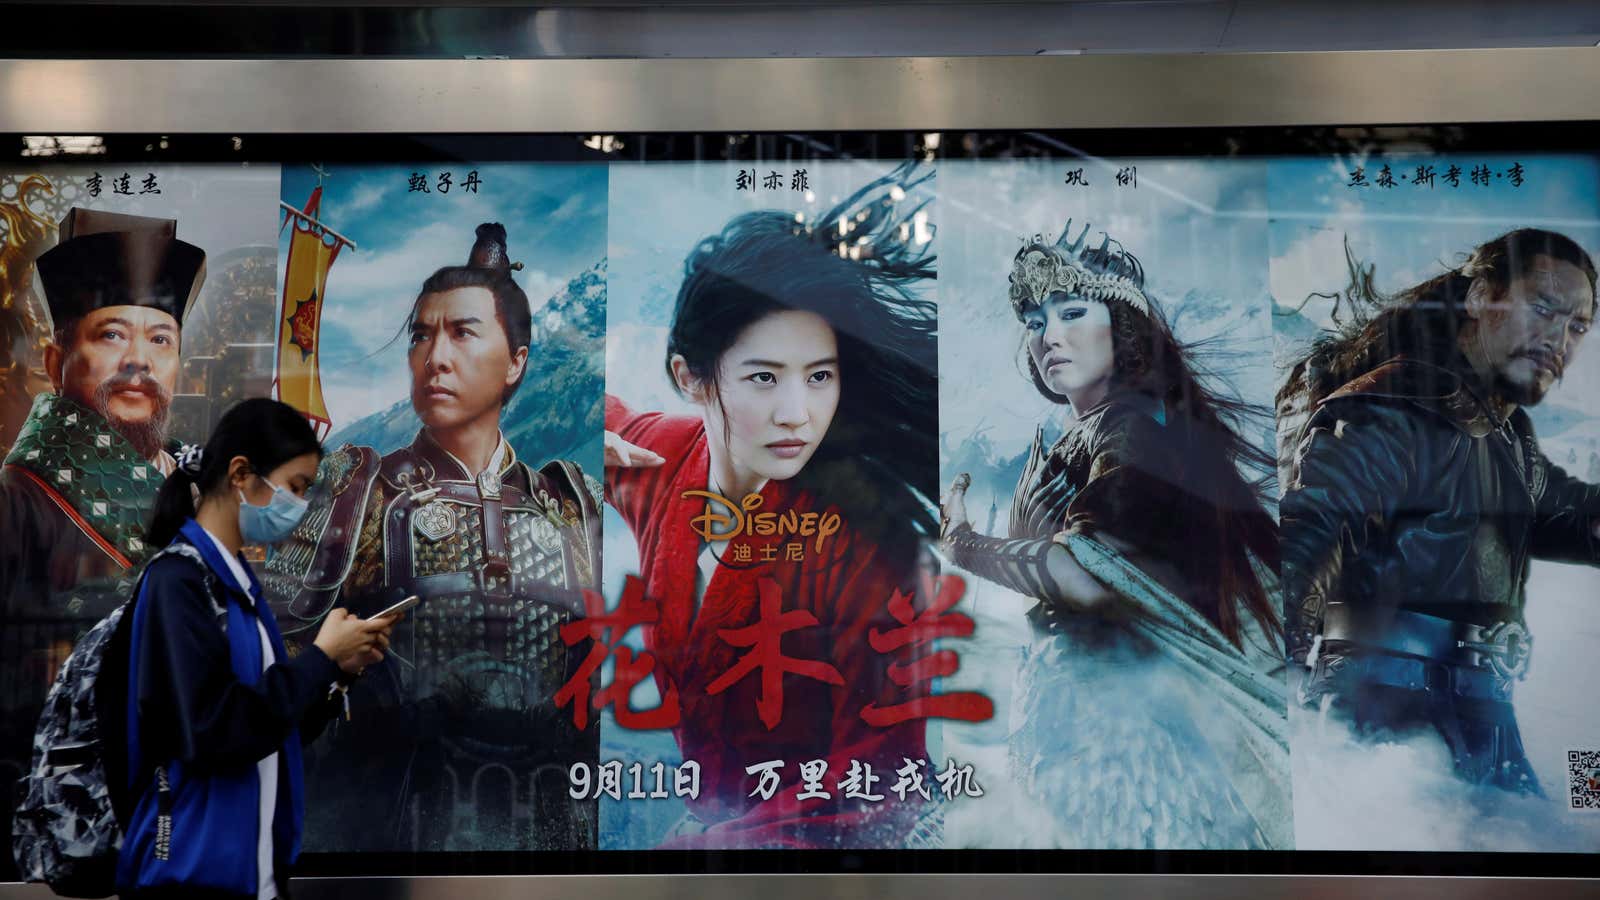 Advertising for Disney’s Mulan at a bus stop in Beijing, China.